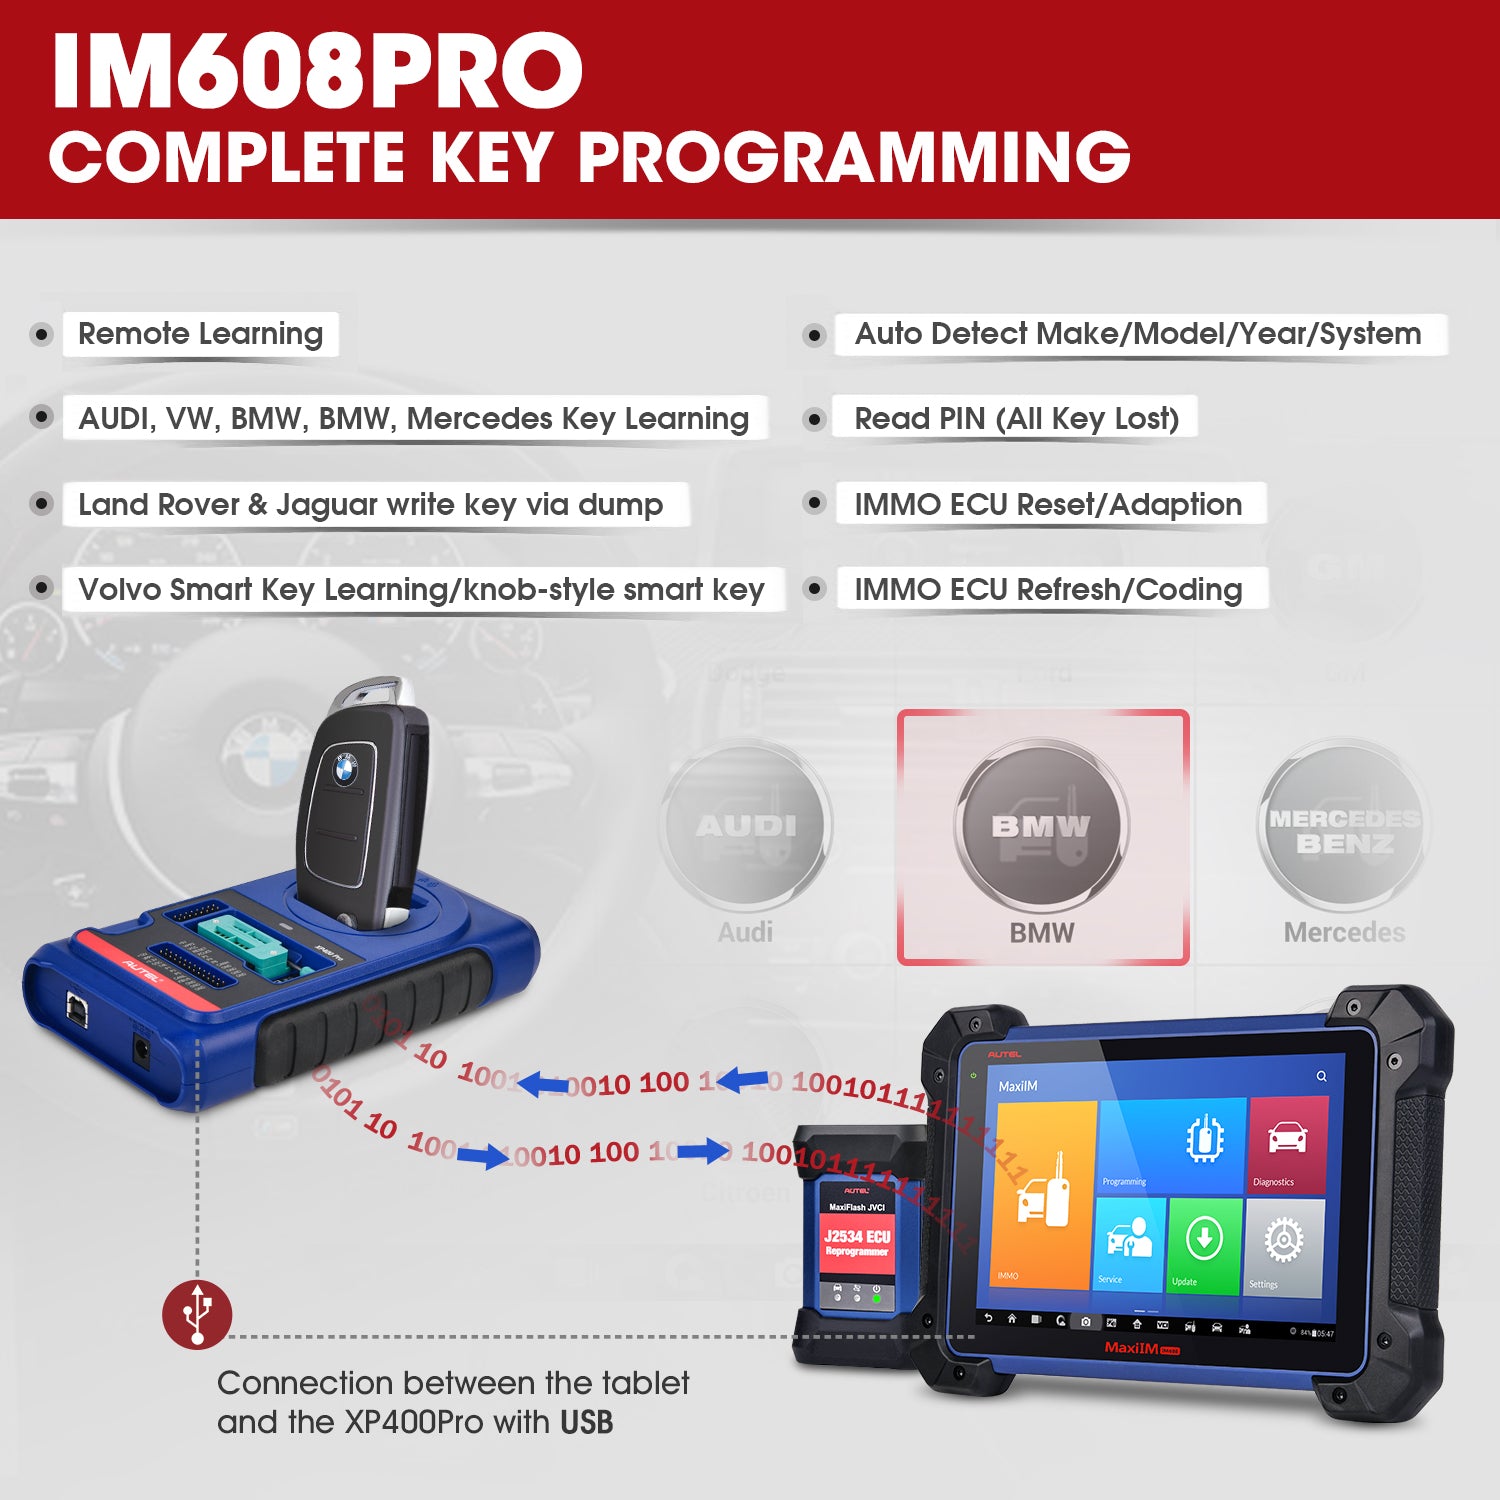 IM608PRO complete key programming